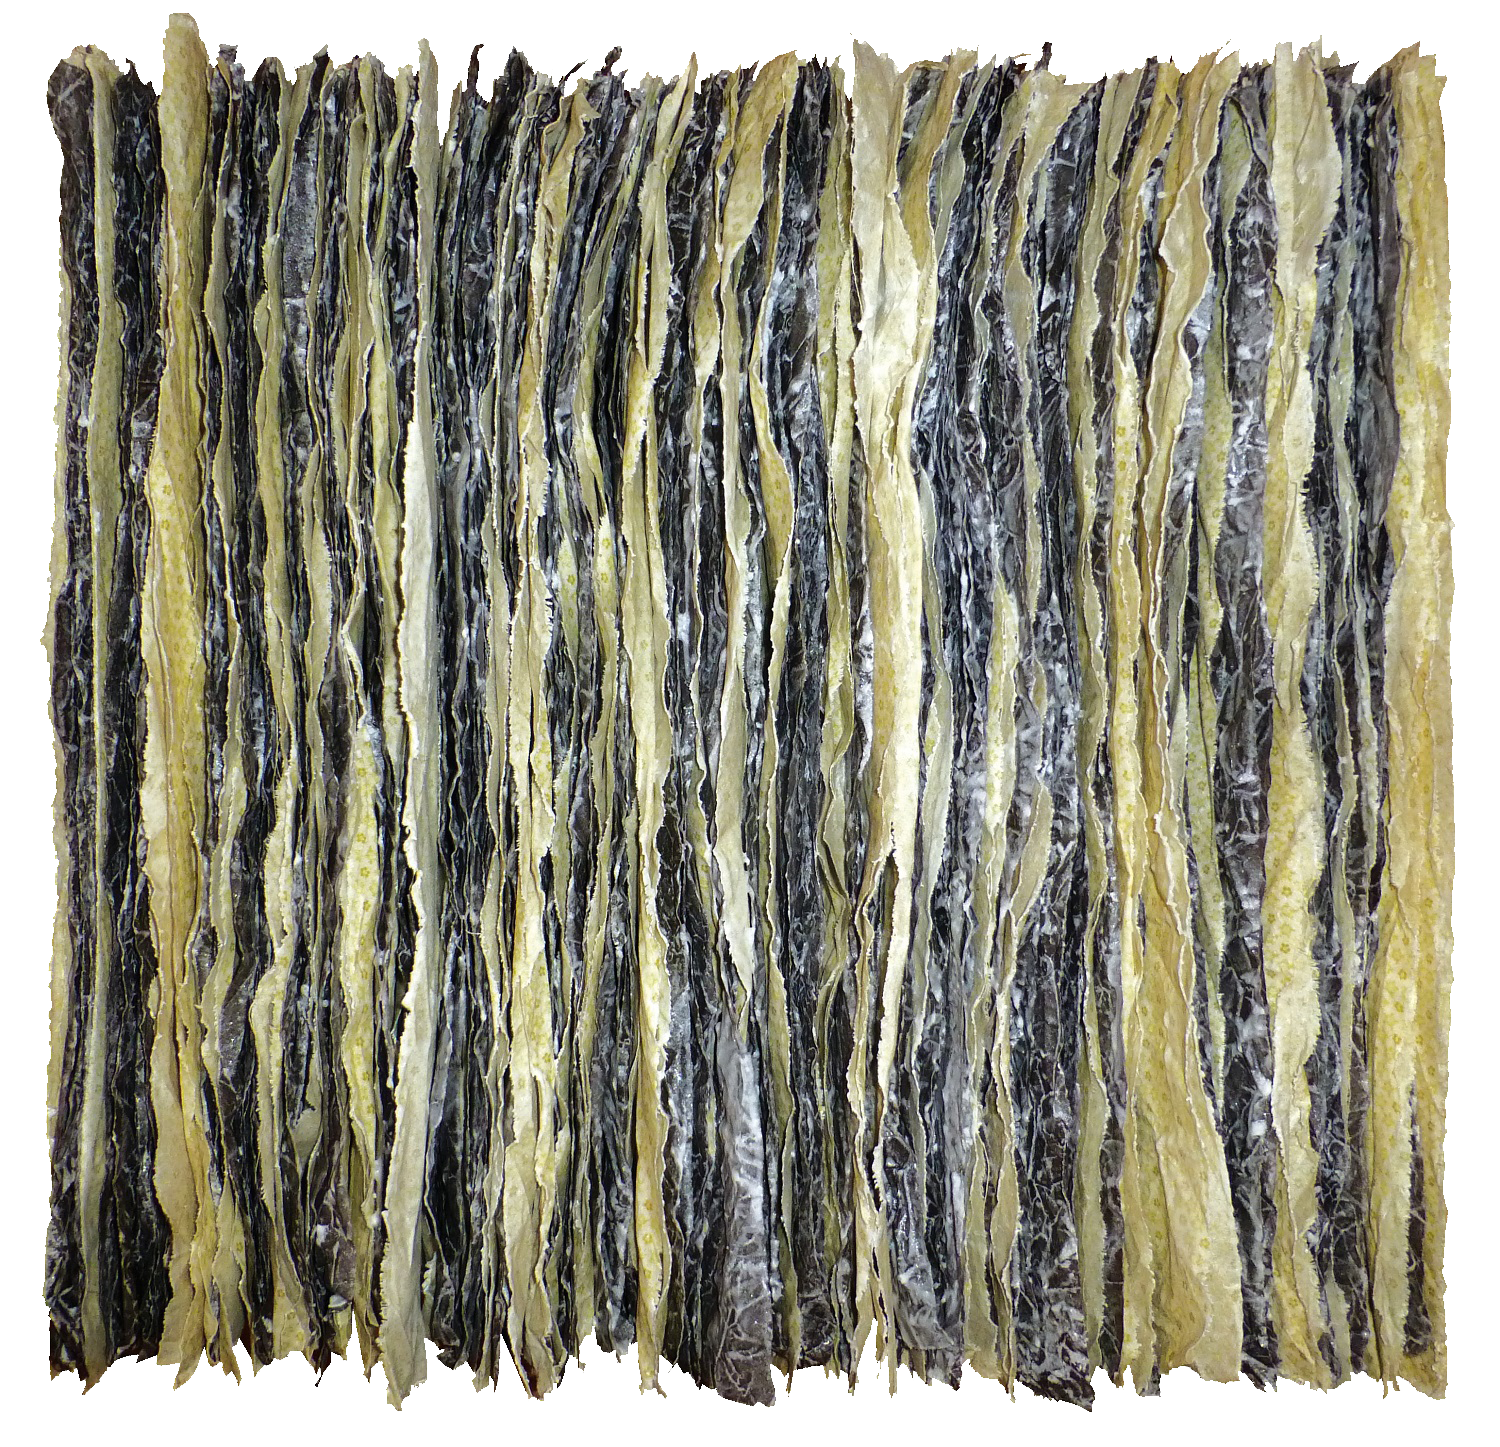 Terra Flora Verda | Papyrus, Cotton, Paraffin | 50 x 50 x 17 cm